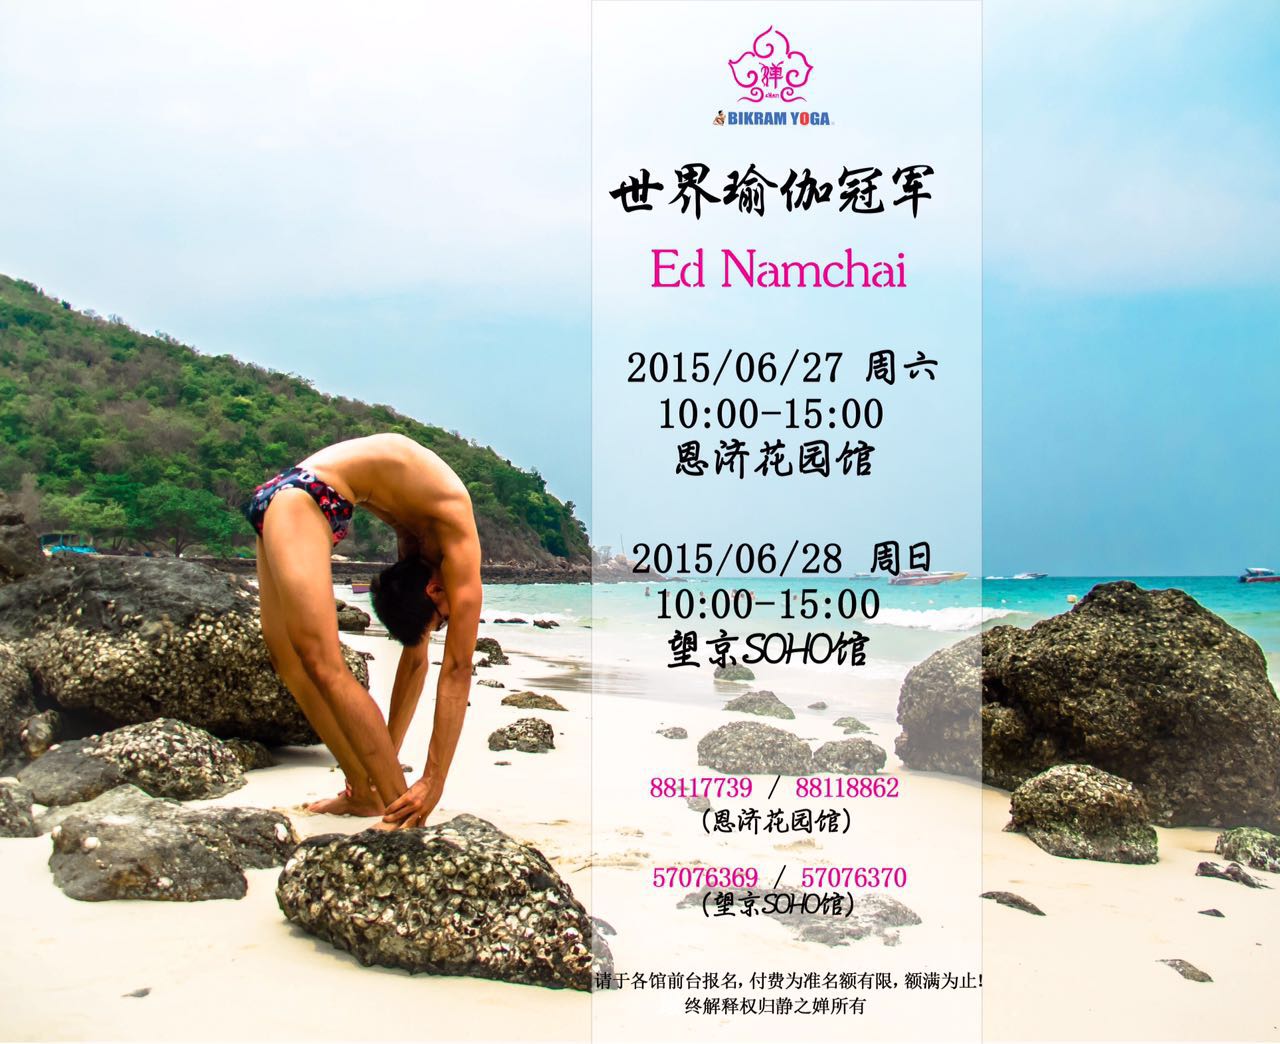 Yoga Workshop with Ed Namchai in Beijing, China